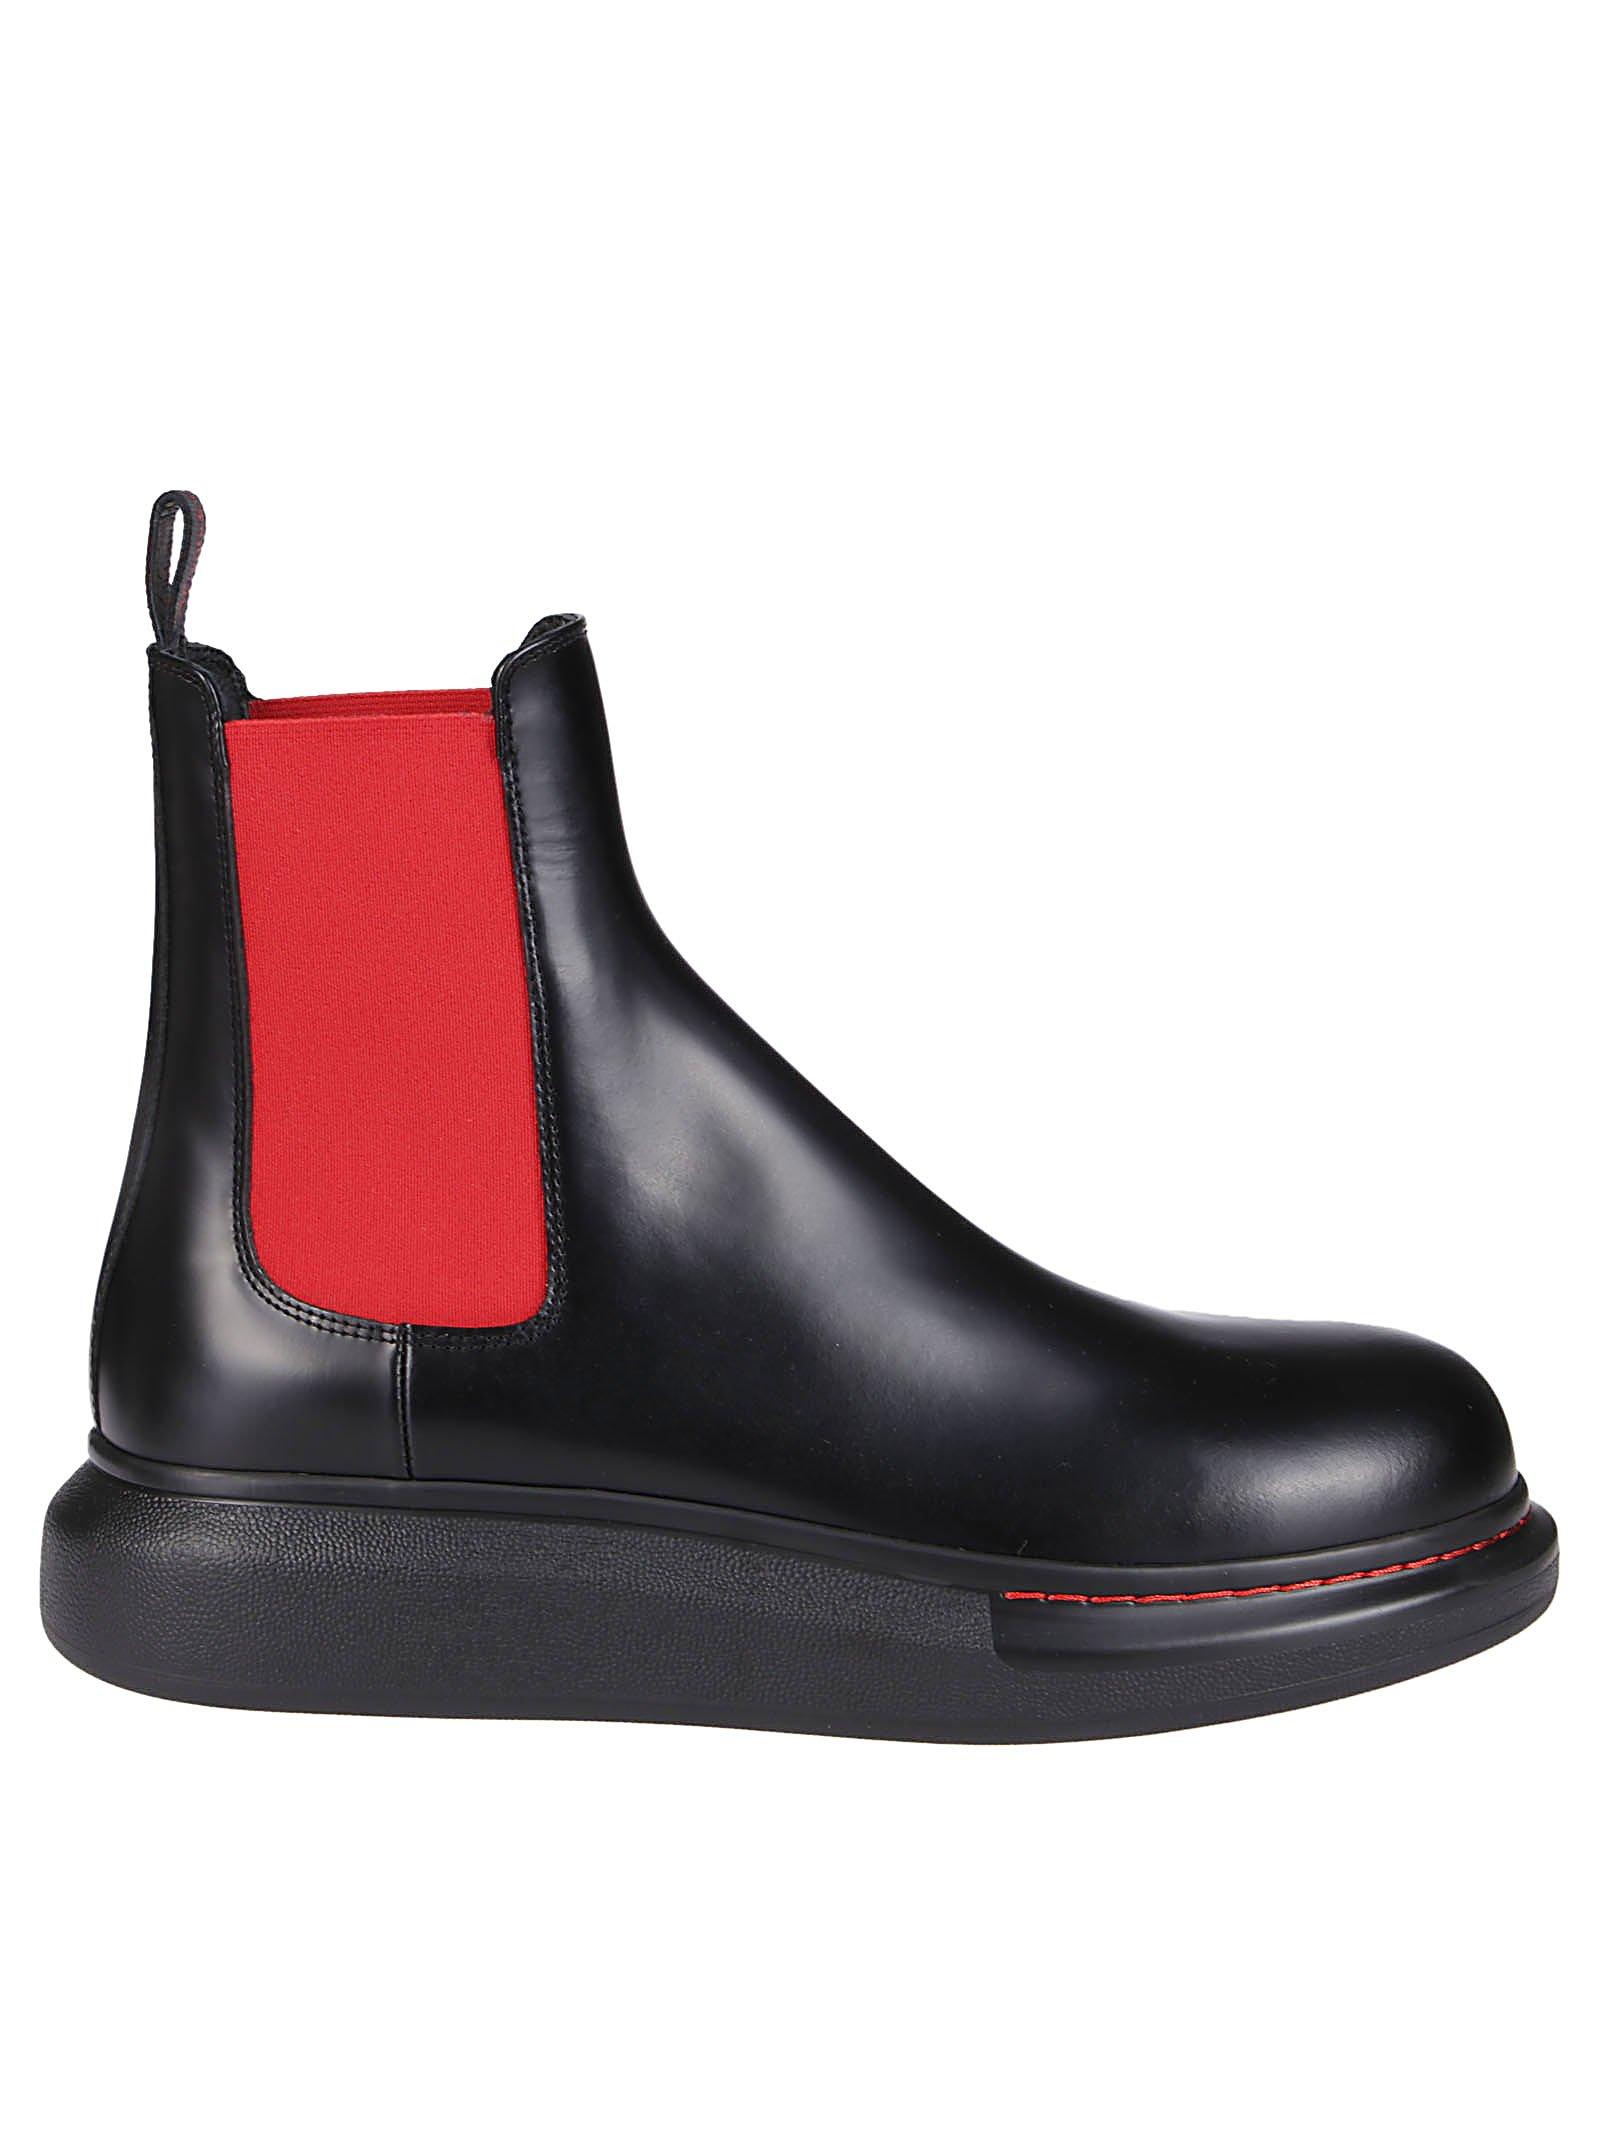 Alexander McQueen Leather Hybrid Chelsea Boots in Black for Men - Lyst